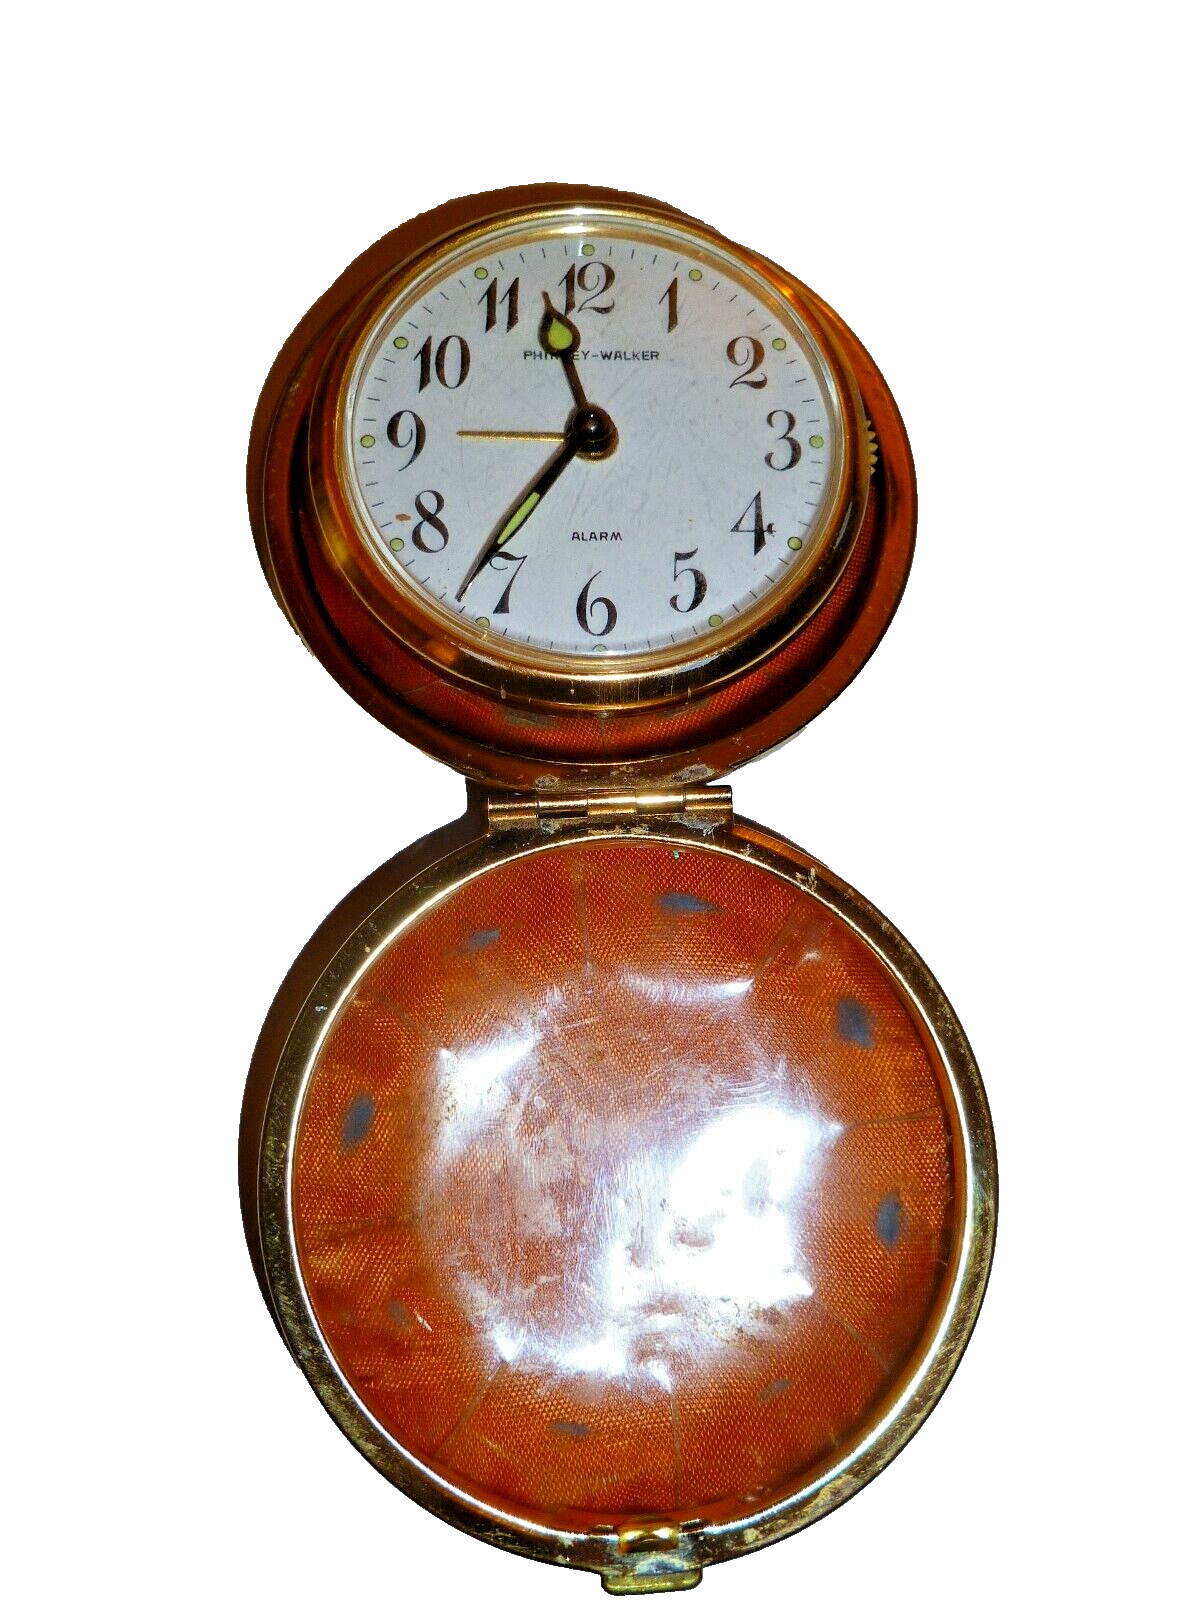 Vintage Phinney Walker Travel Alarm Clock Working Leather Case